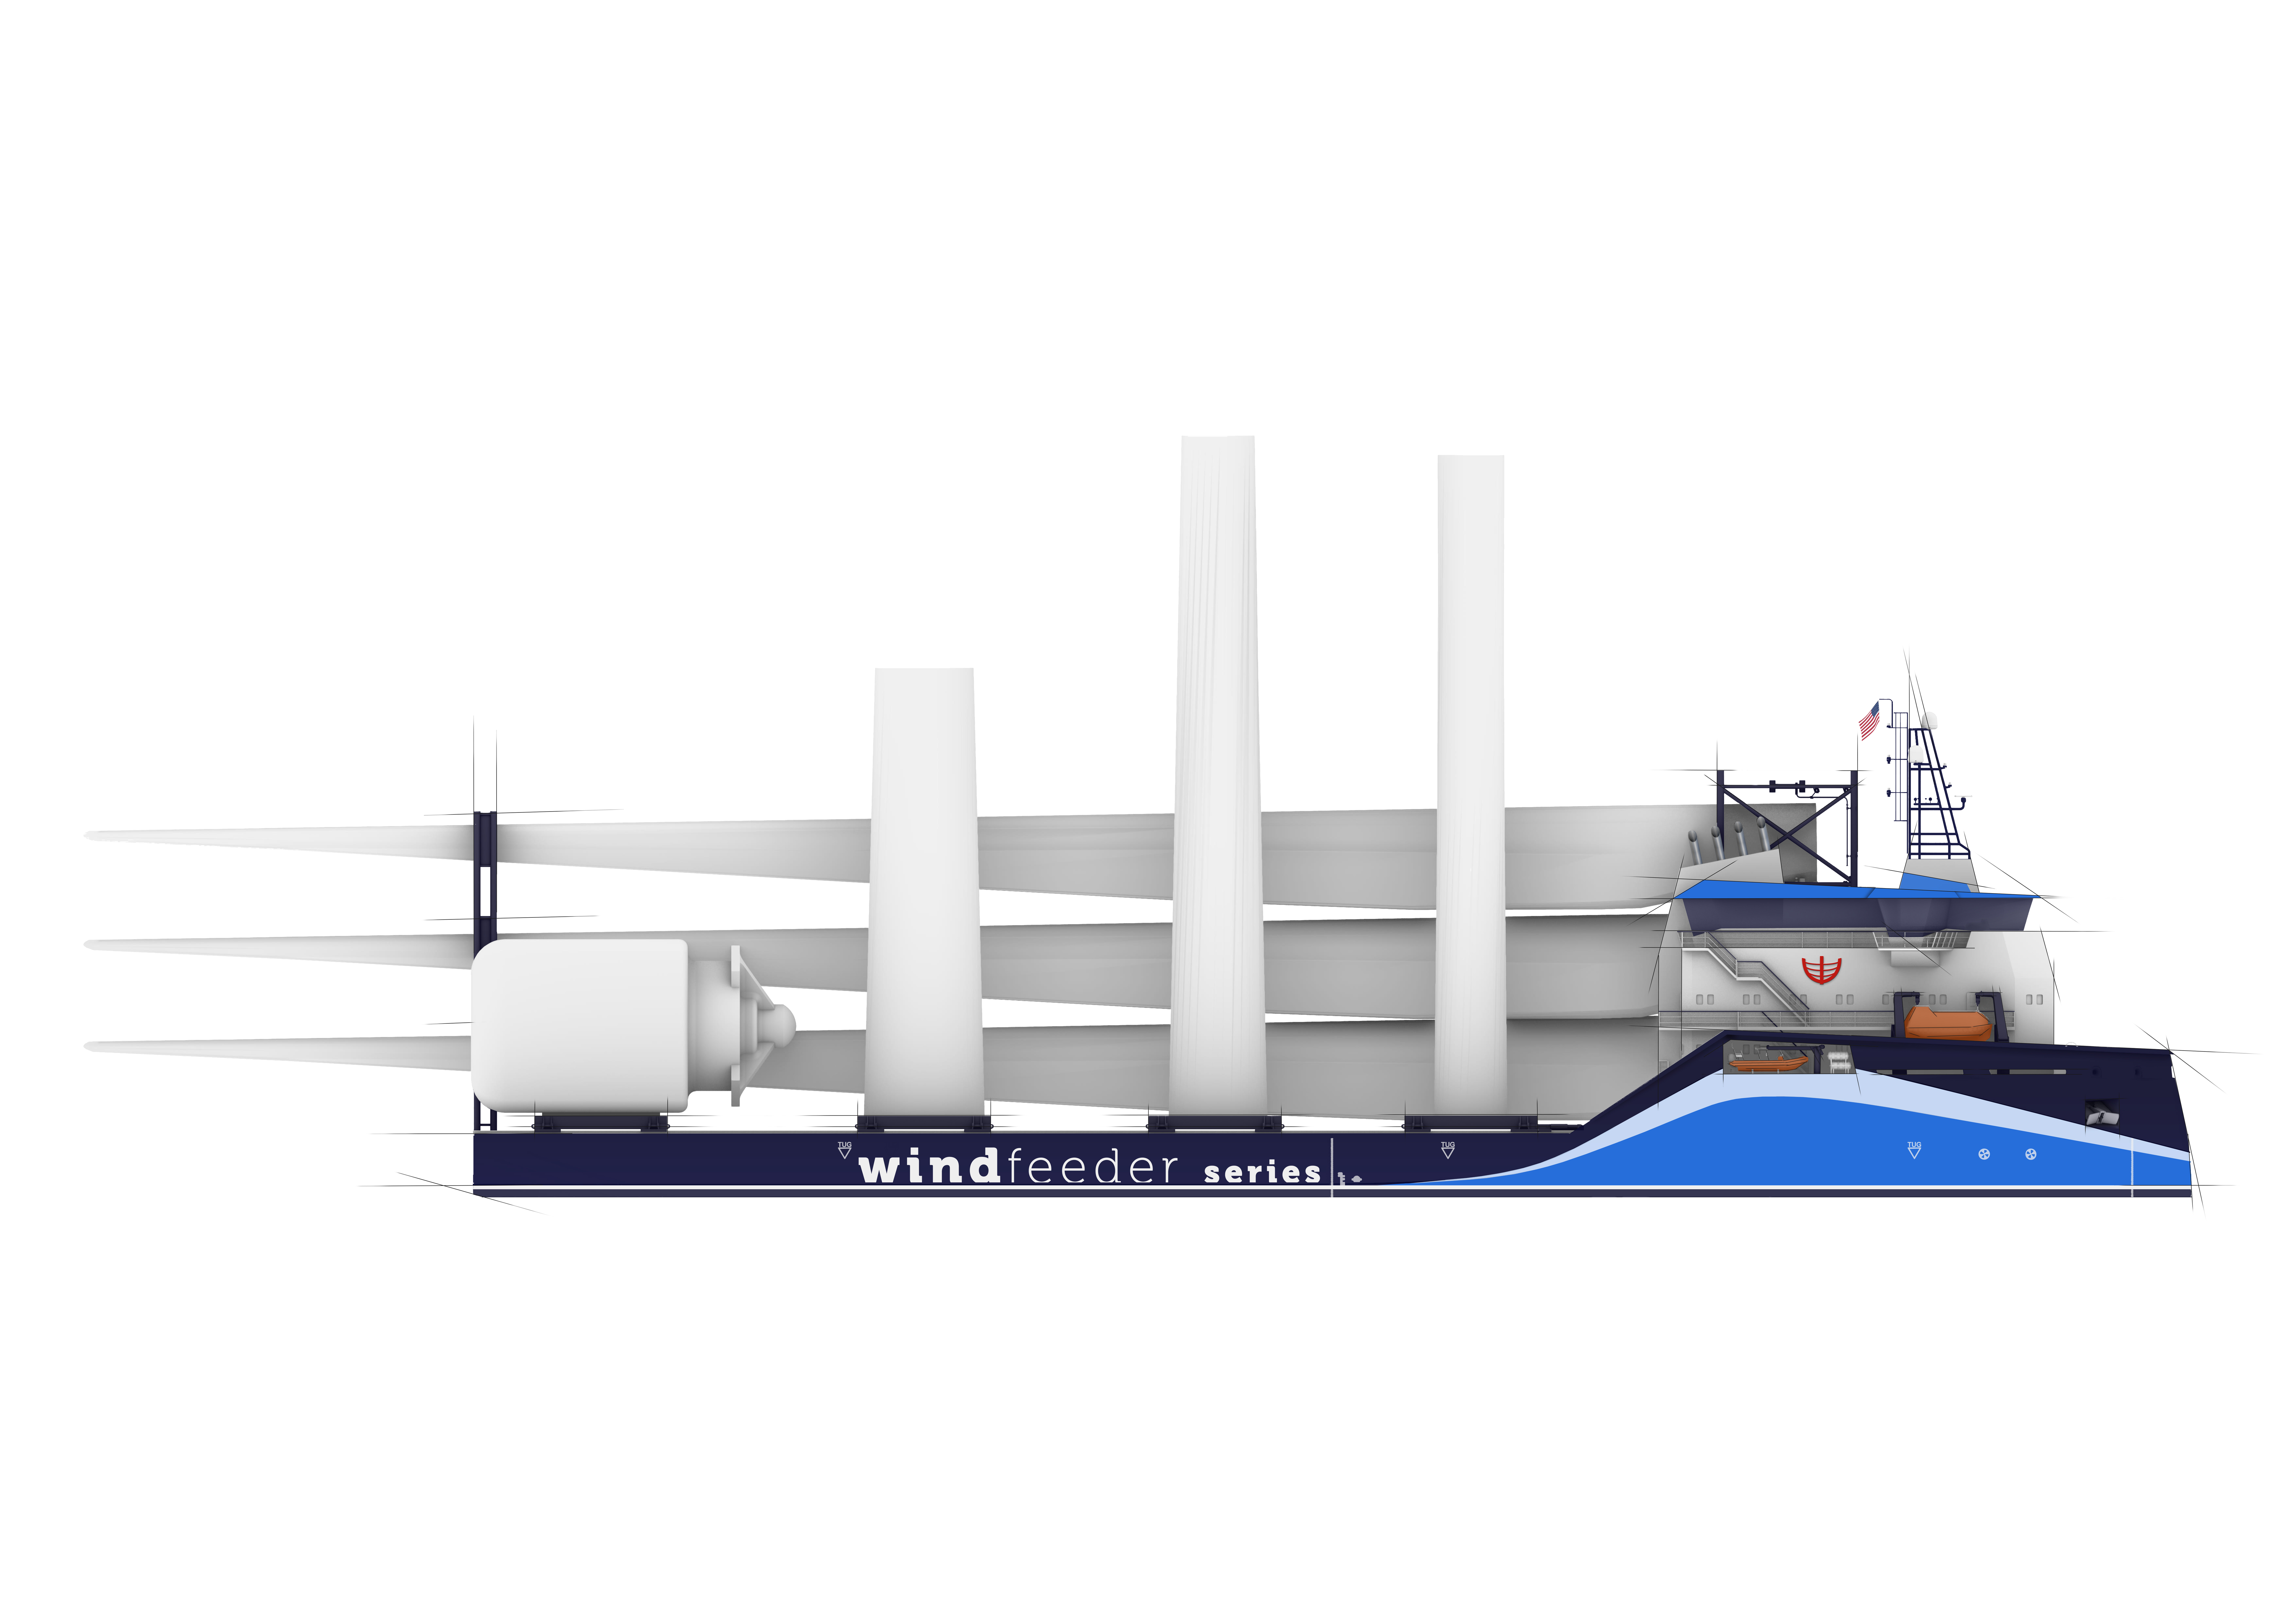 C-Job Ampelmann offshore wind feeder vessel render side view